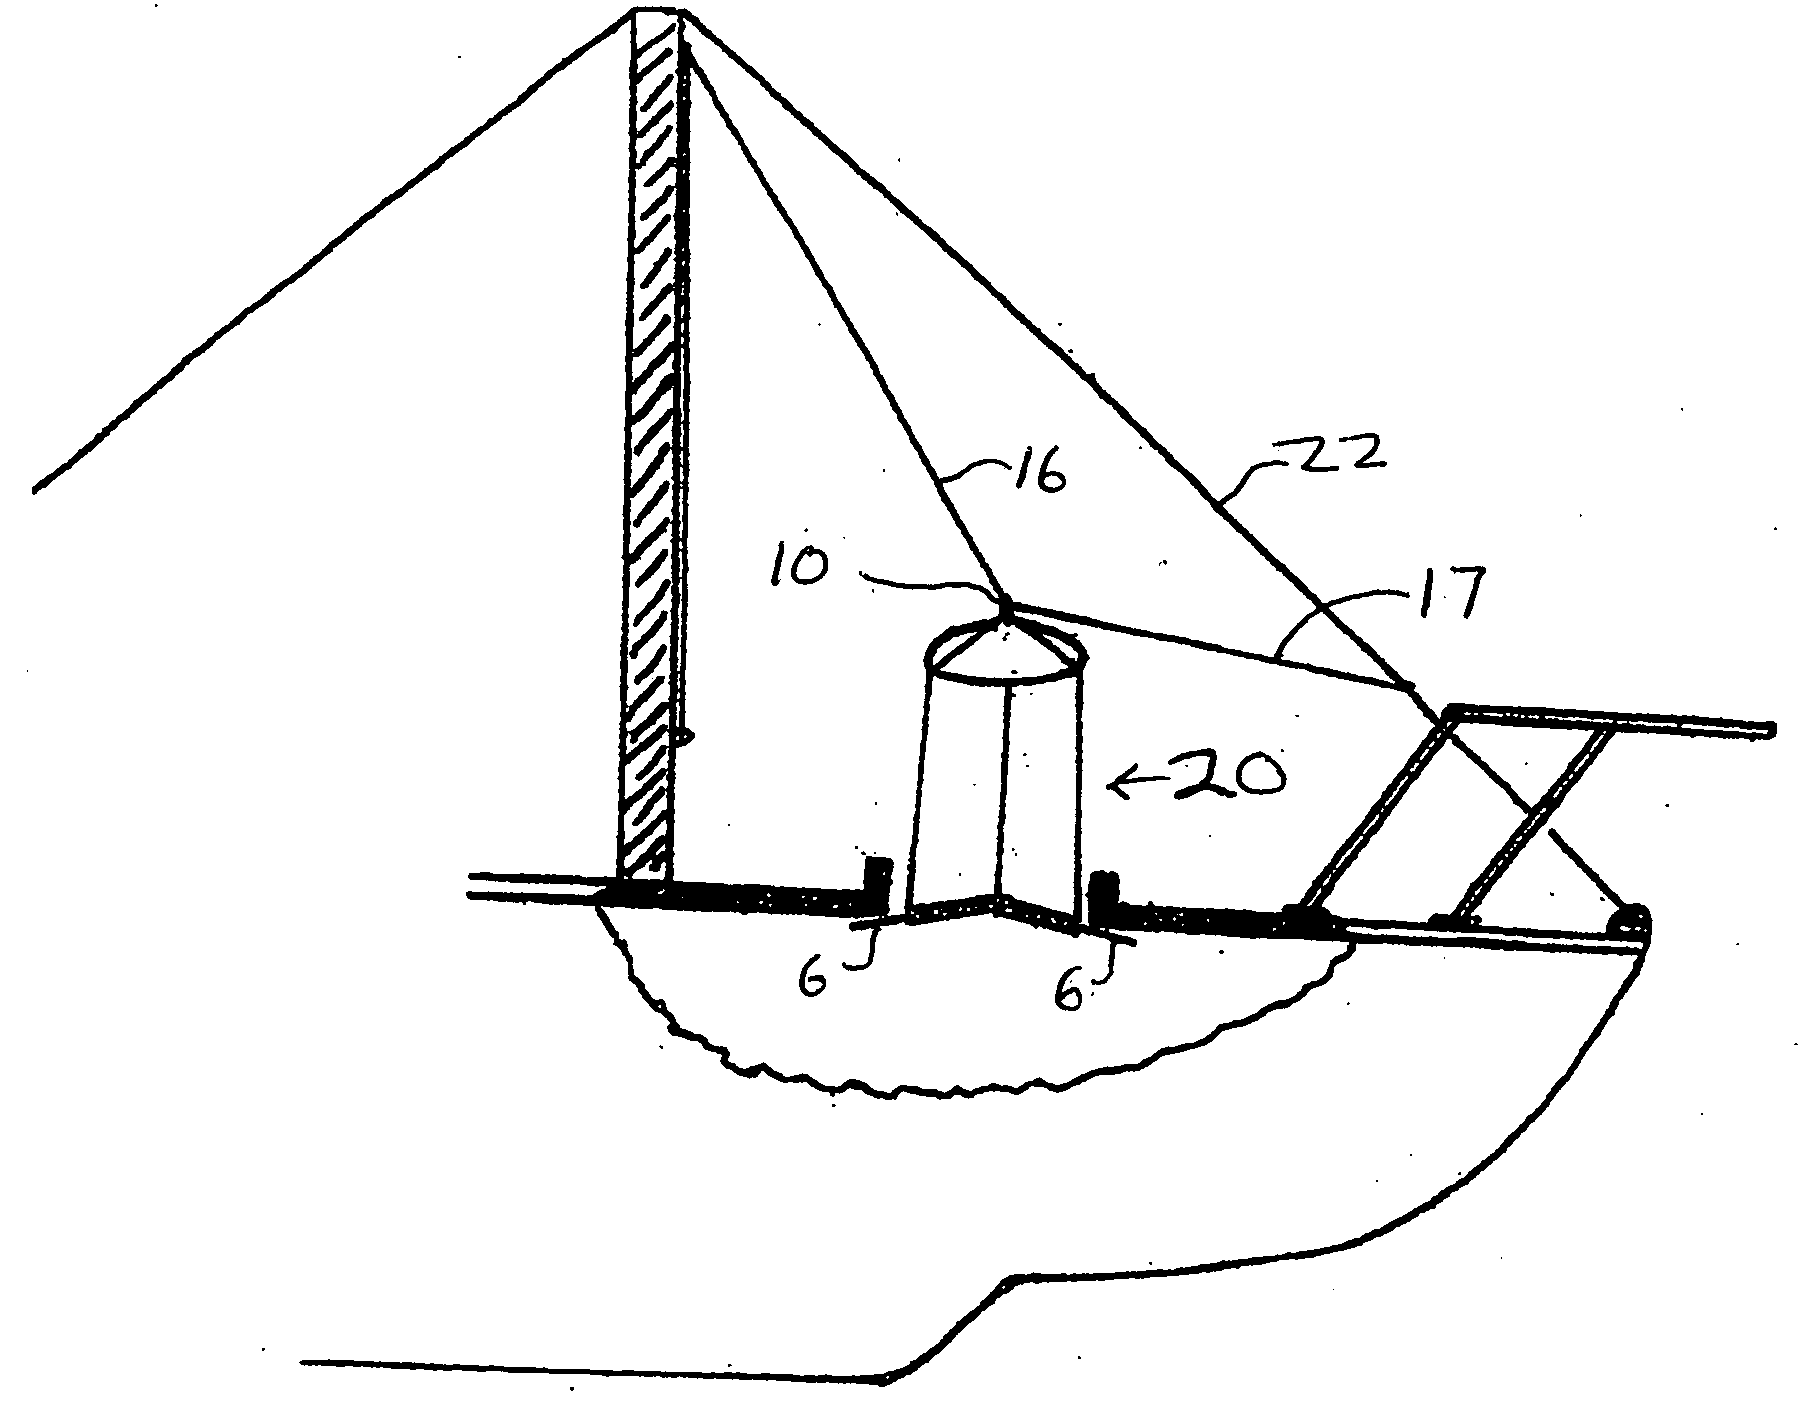 Three-sided wind scoop